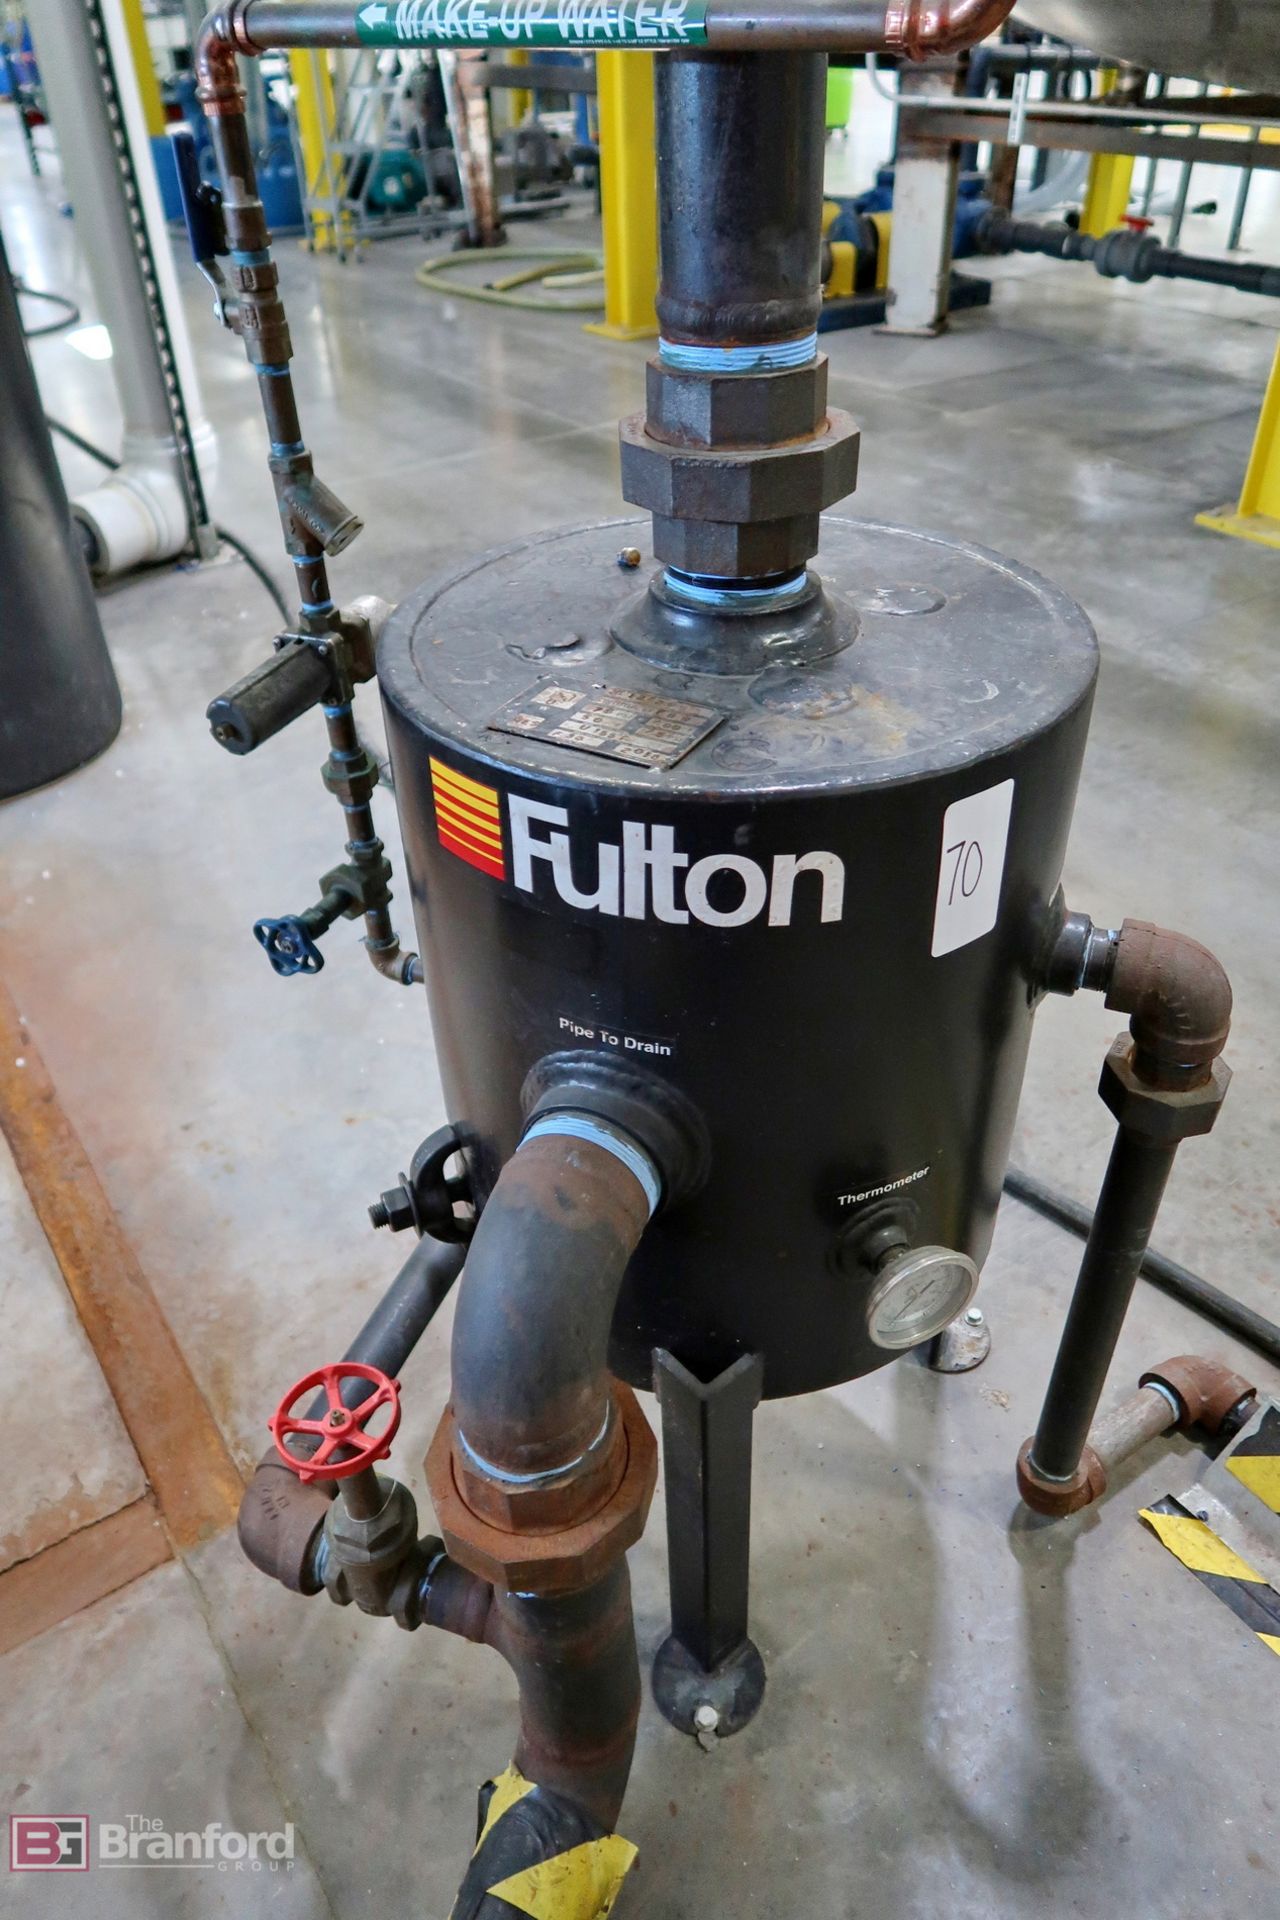 Fulton boiler system - Image 13 of 14